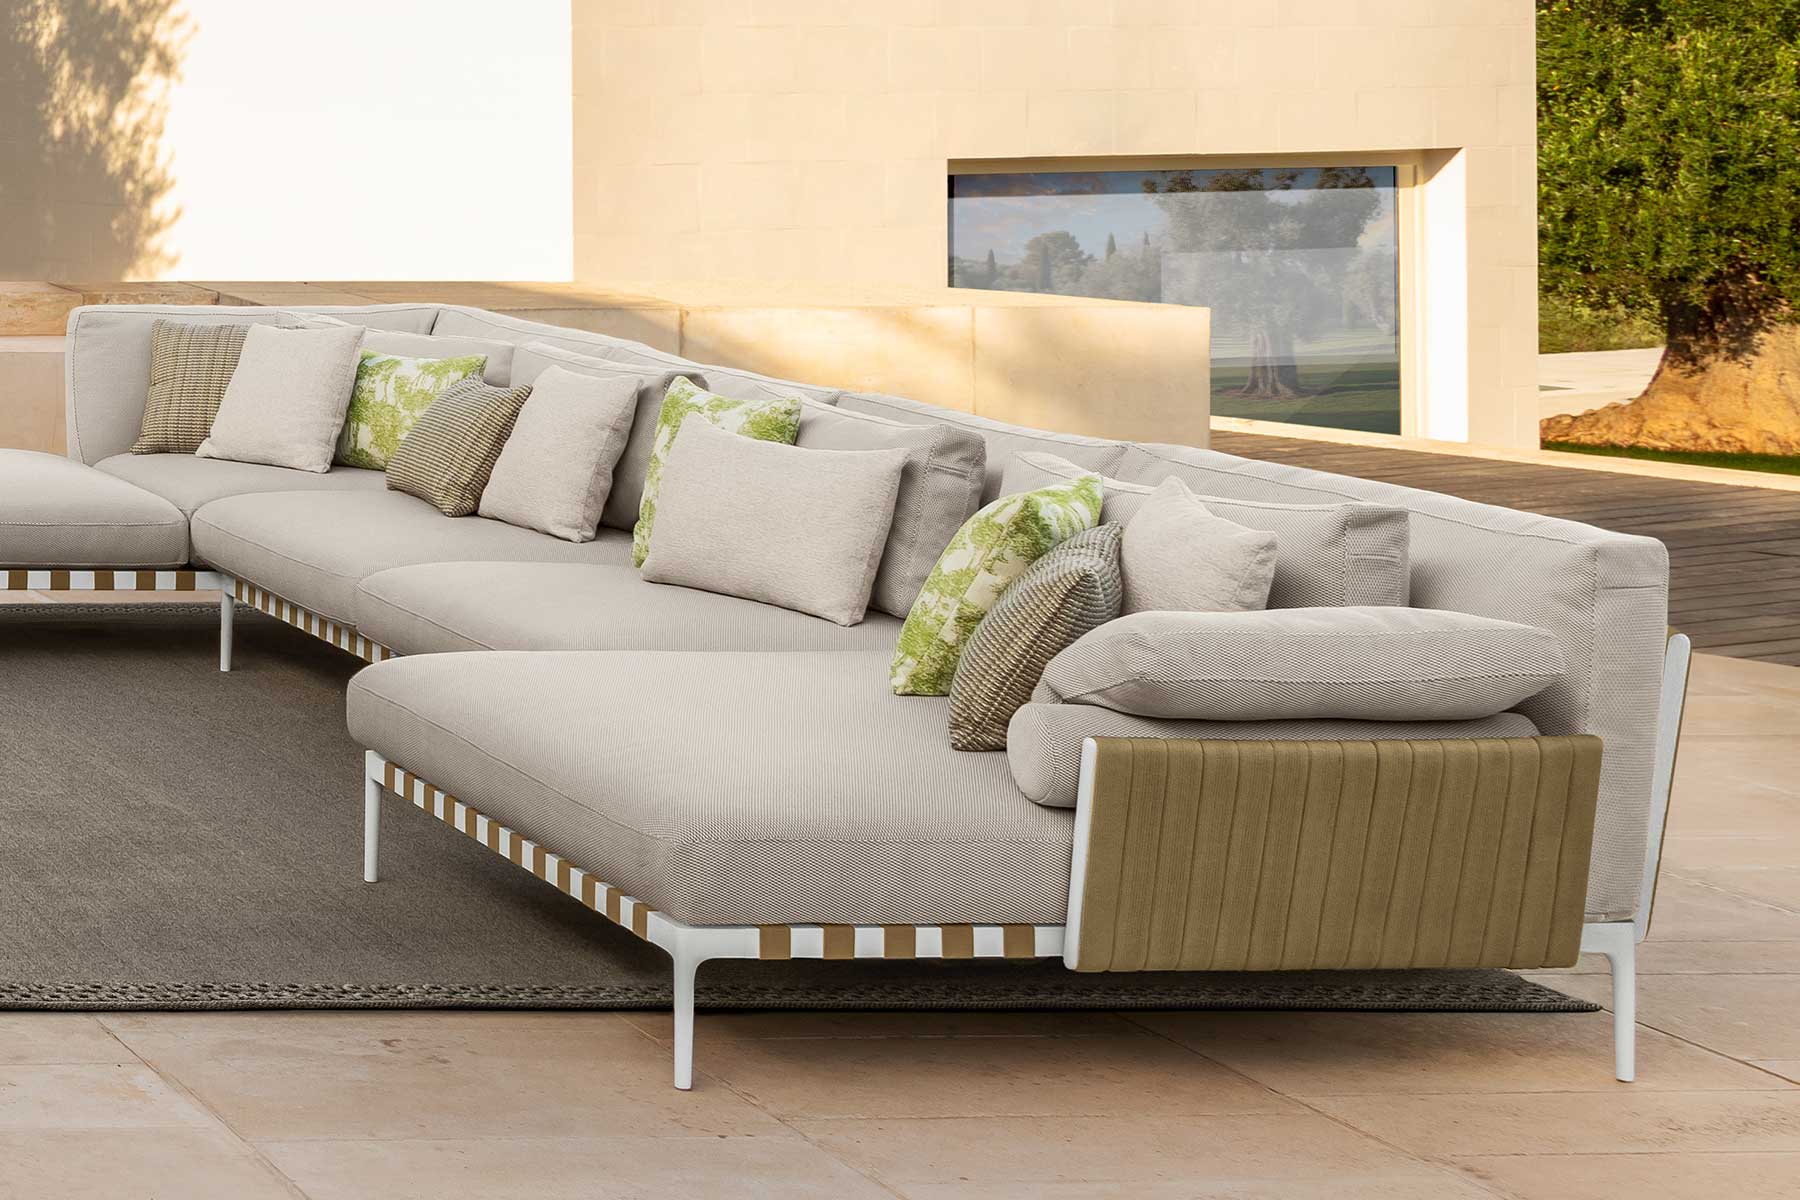 San José beige garden lounge set - Shop Online | Italy Dream Design